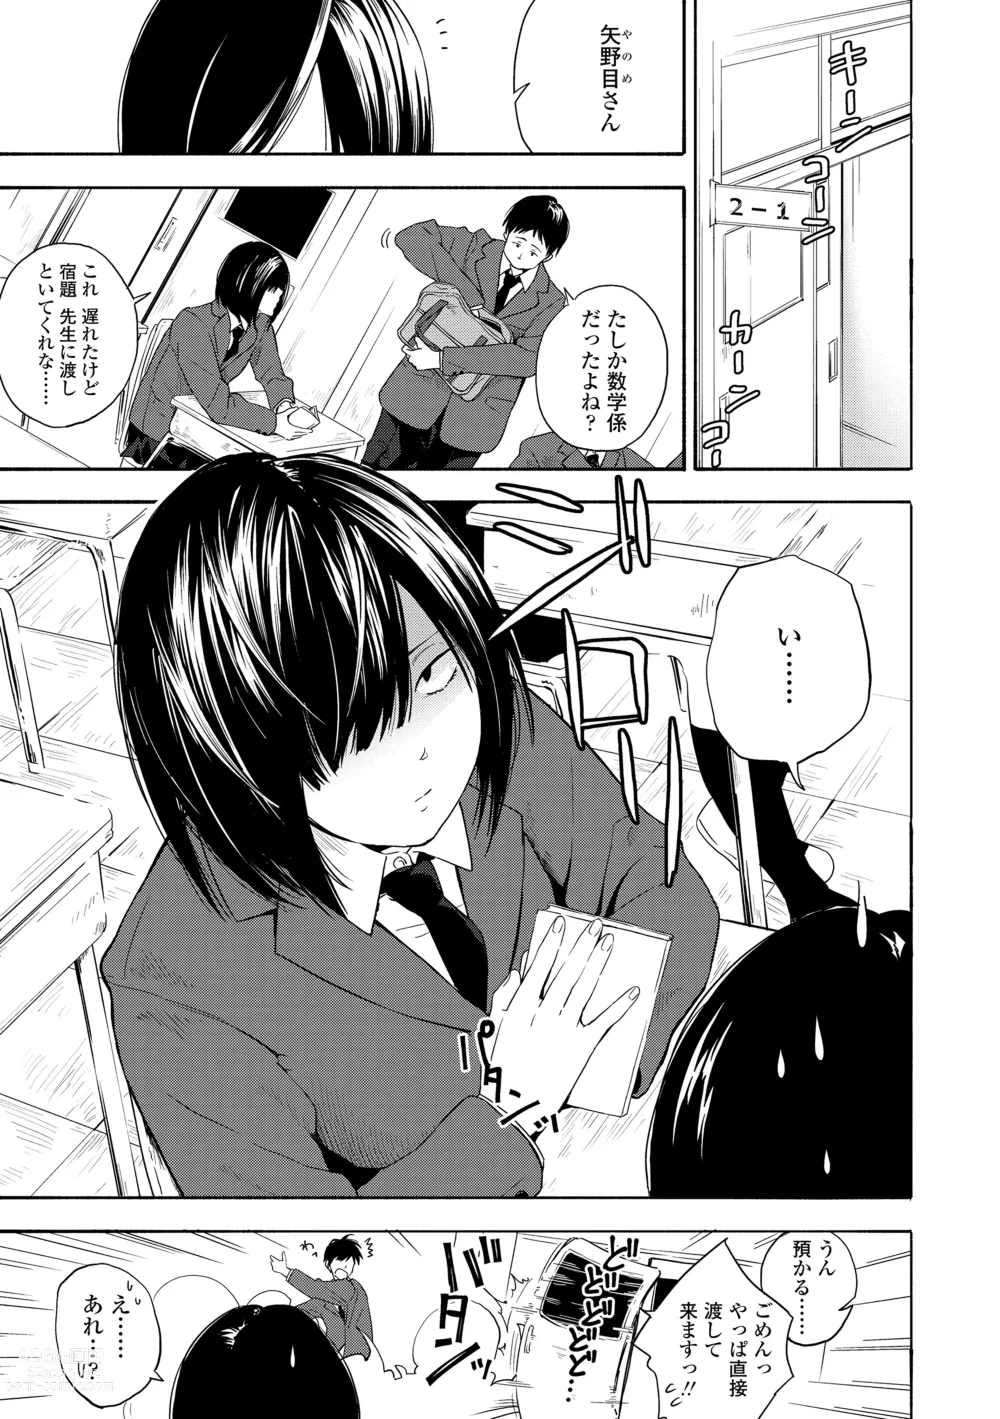 Page 5 of manga Shishunki no Eros - puberty eros + DLsite Kounyu Tokuten